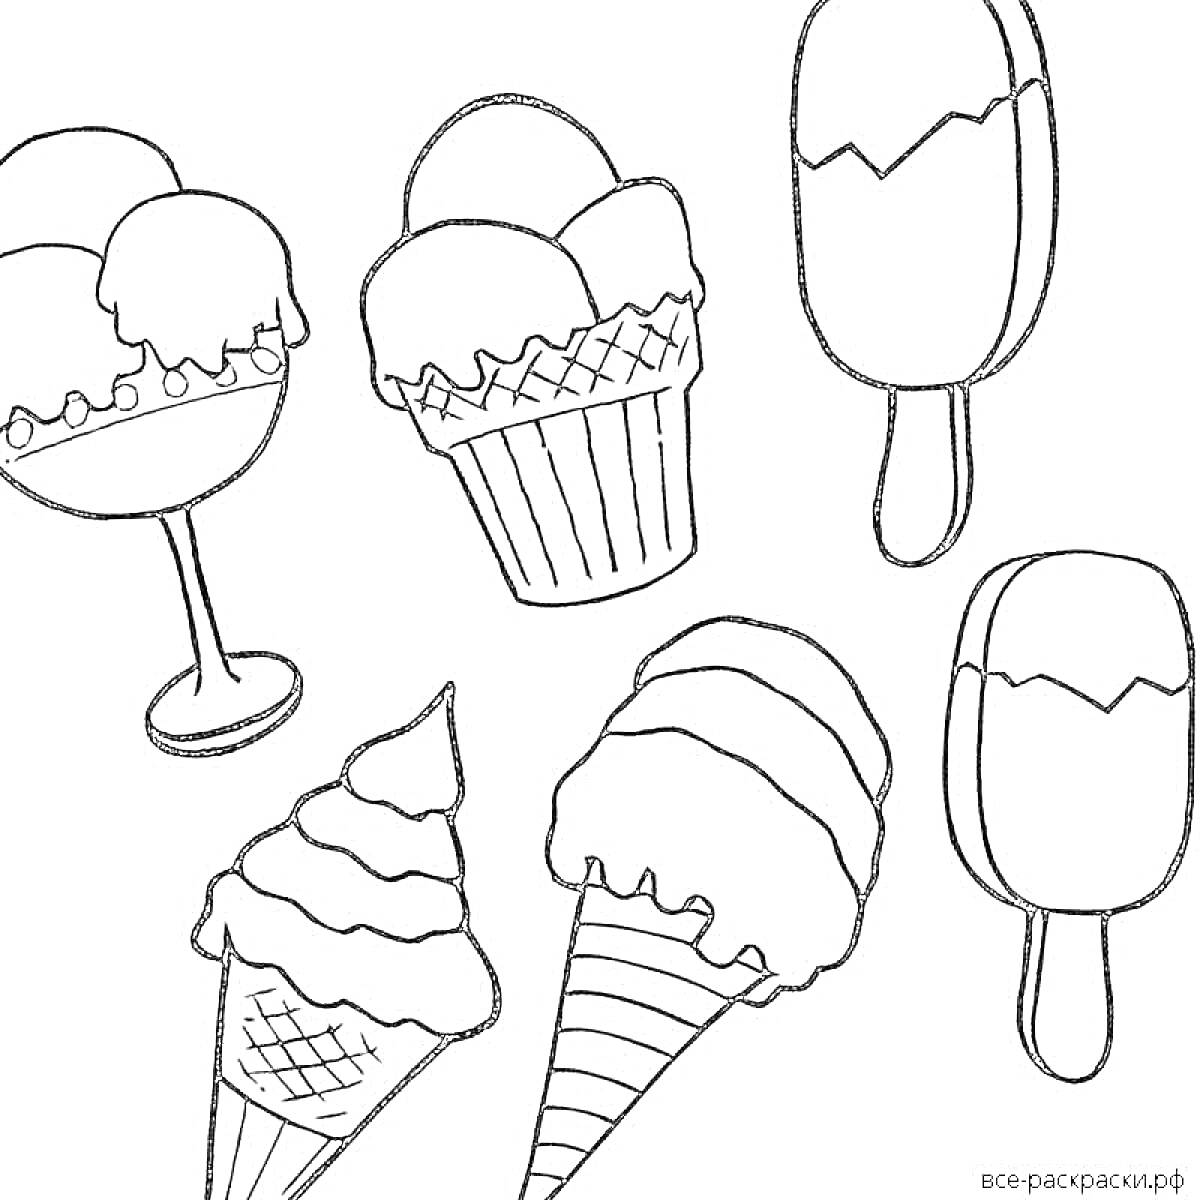 Мороженое в вазочке, мороженое в вафельном стаканчике, мороженое на палочке, рожок мороженого